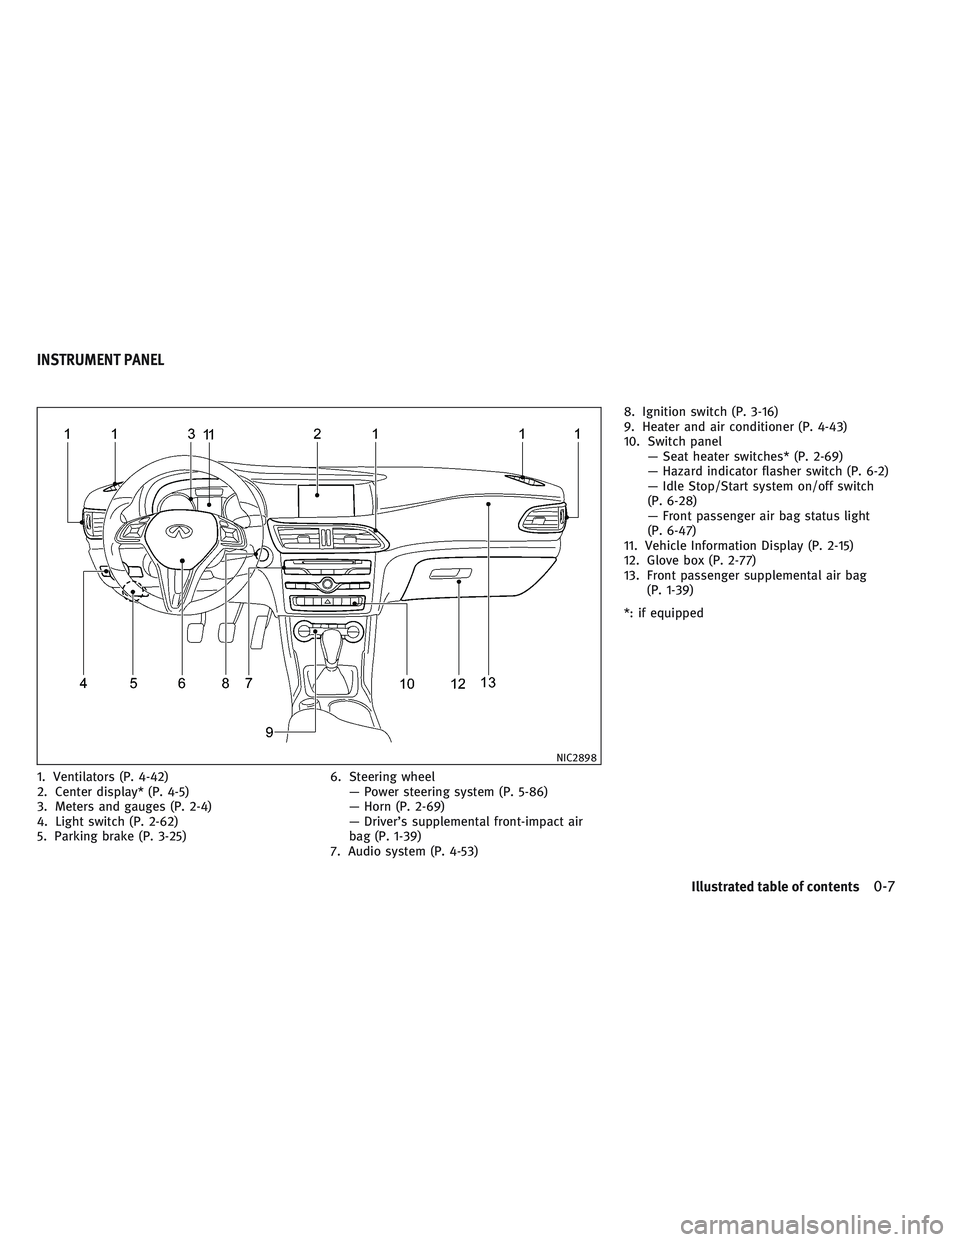 INFINITI QX30 2017 User Guide 1. Ventilators (P. 4-42)
2. Center display* (P. 4-5)
3. Meters and gauges (P. 2-4)
4. Light switch (P. 2-62)
5. Parking brake (P. 3-25)6. Steering wheel
— Power steering system (P. 5-86)
— Horn (P